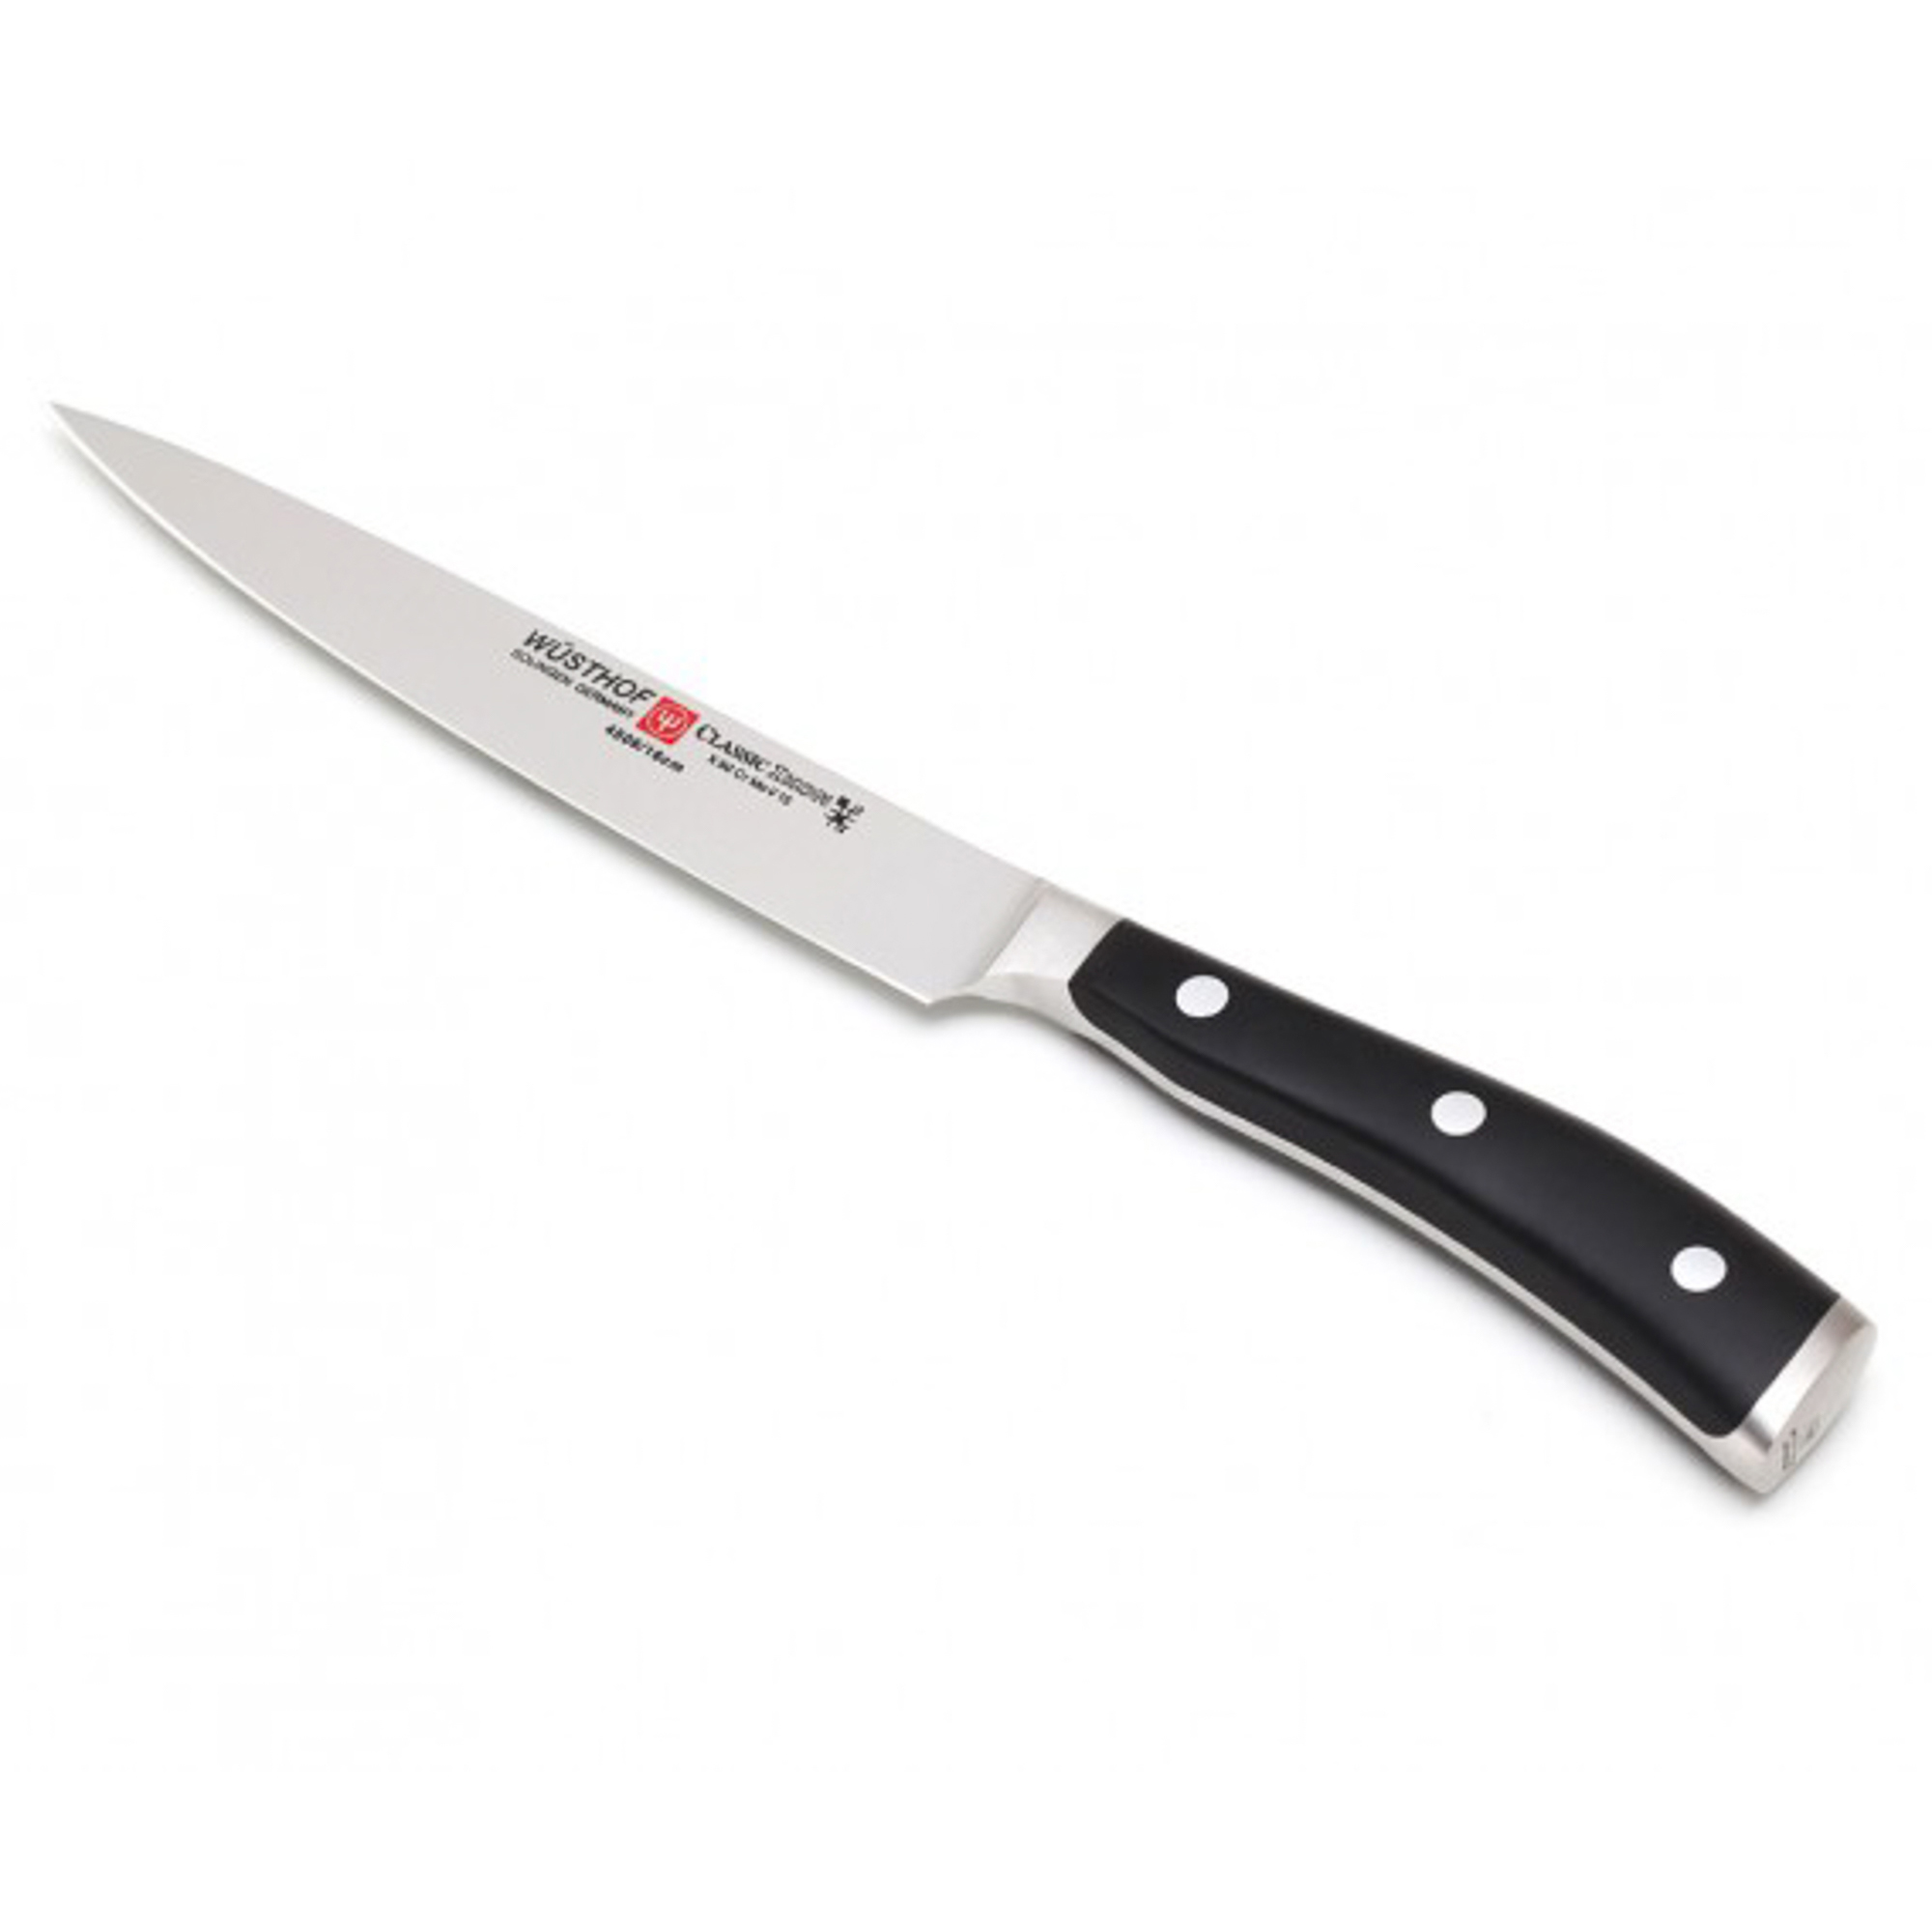 Нож для резки мяса 16 см Wusthoff нож для мяса